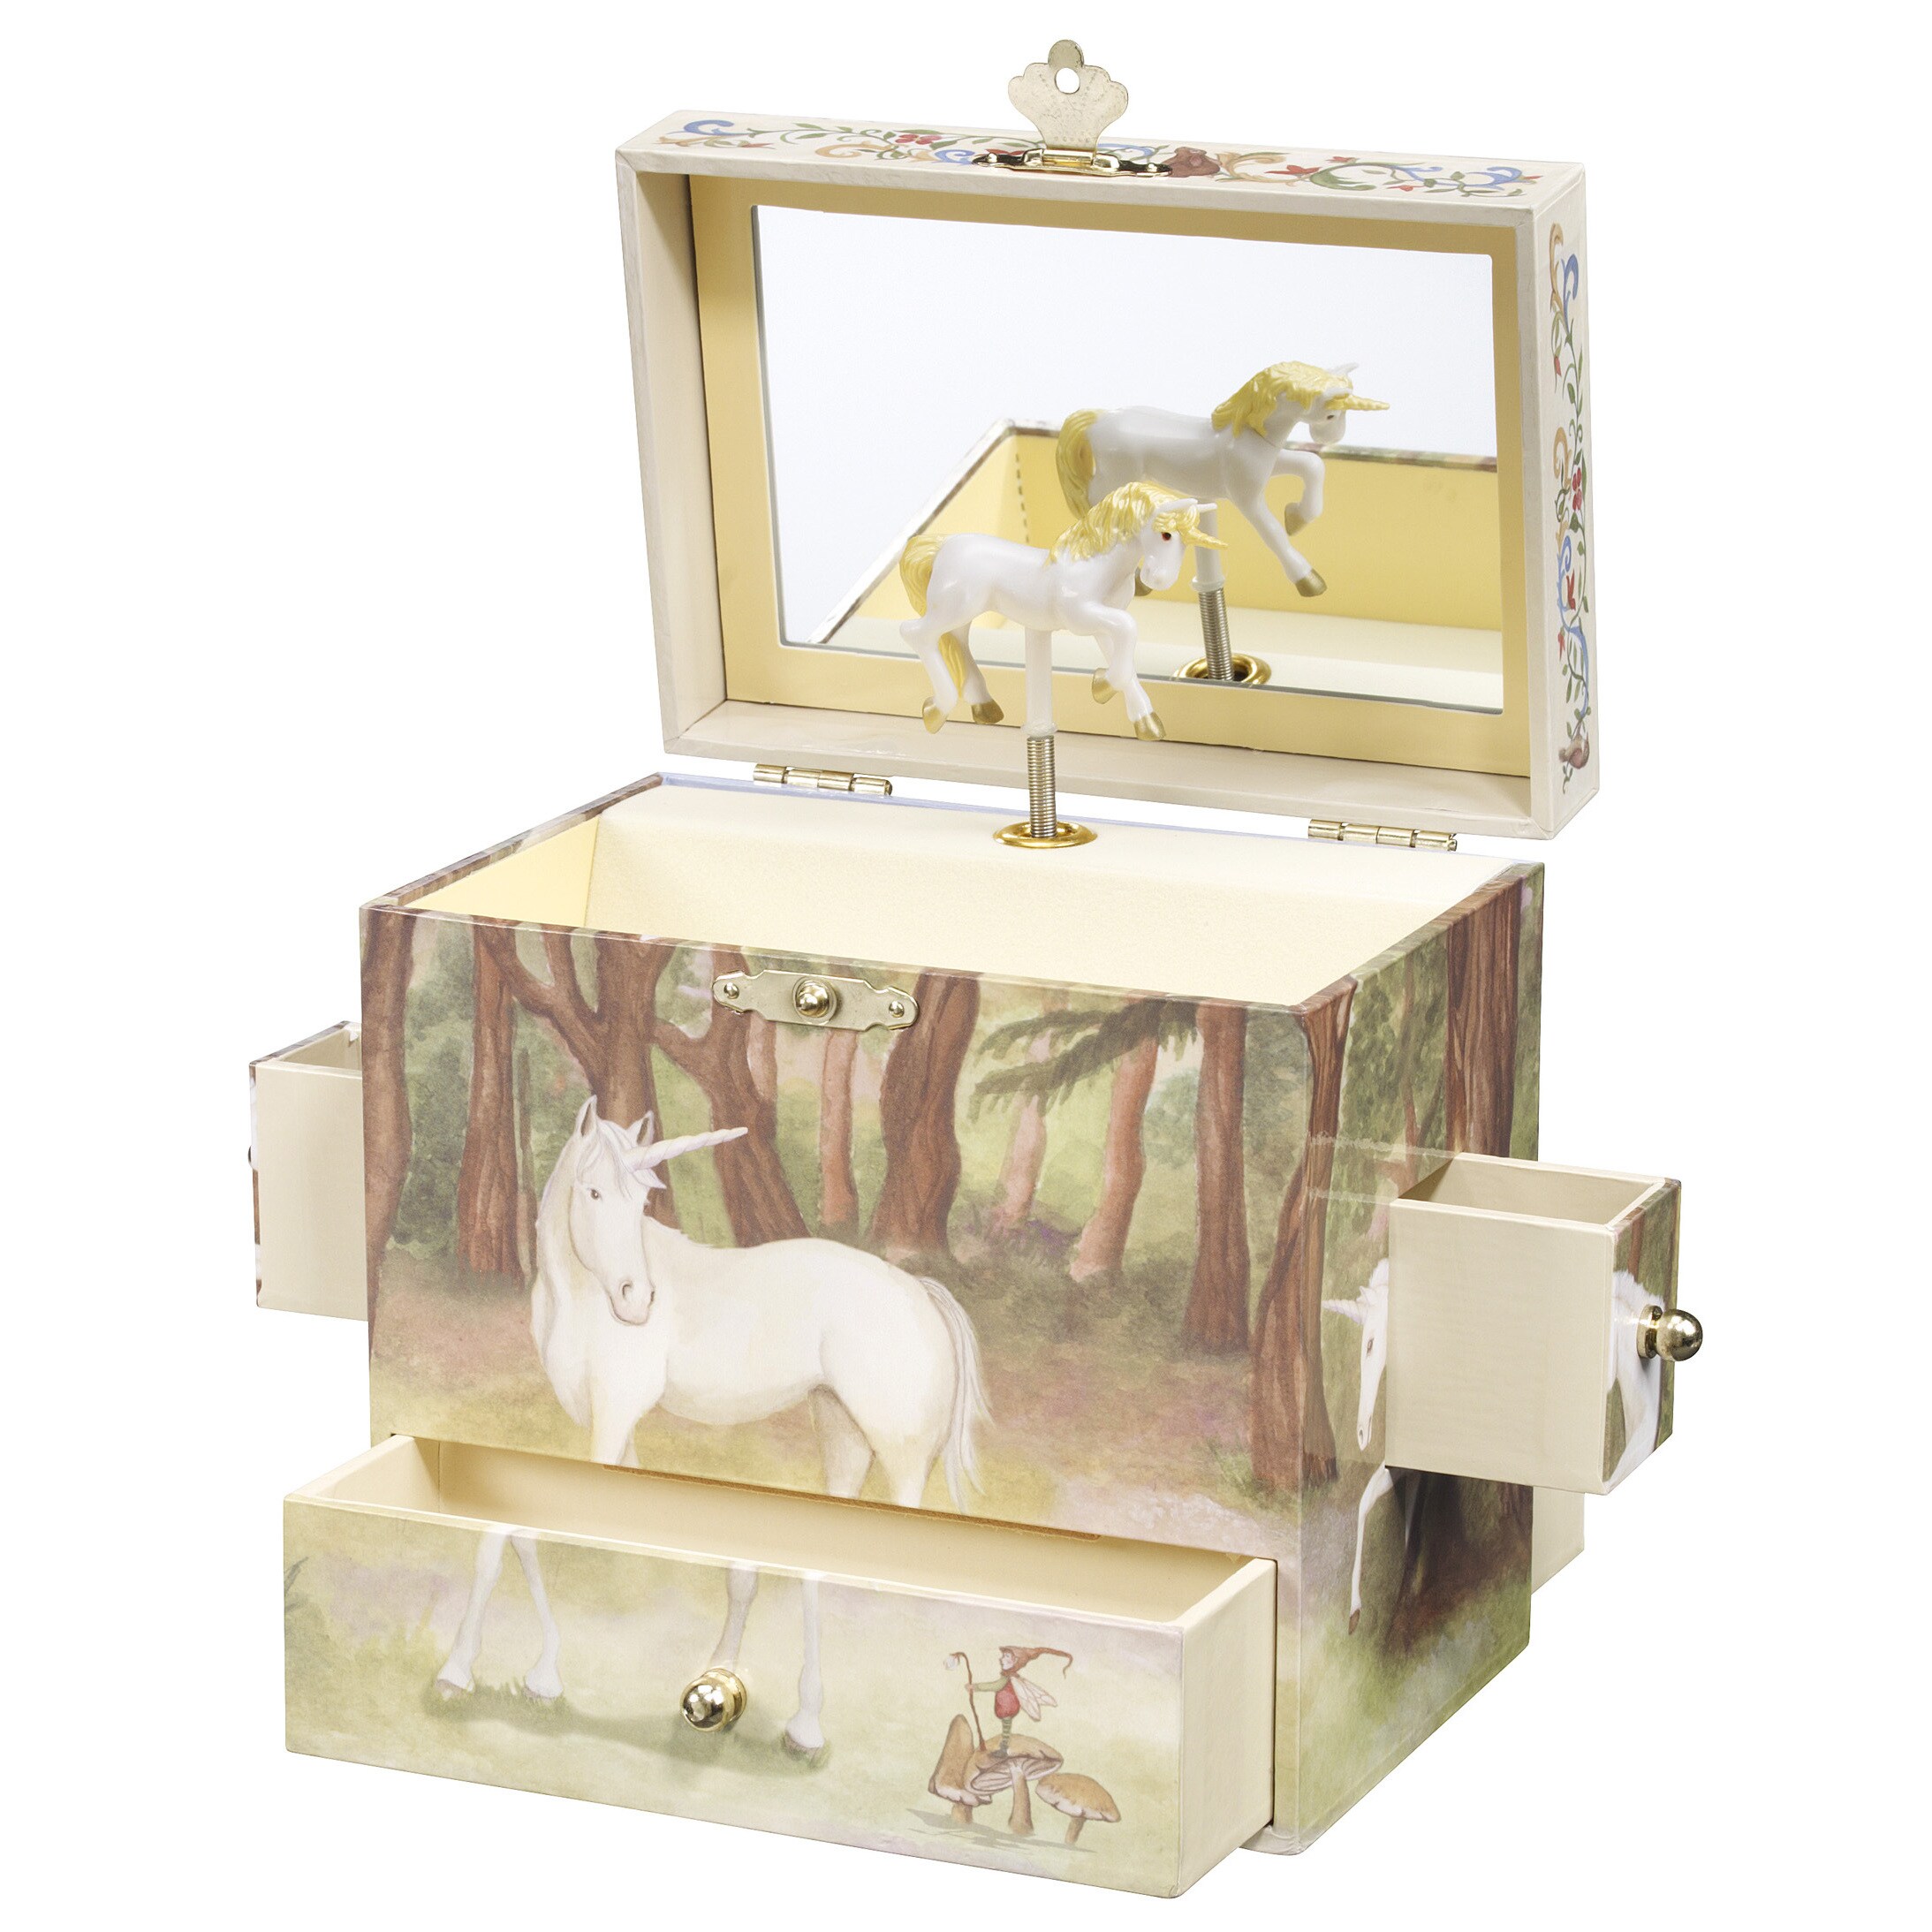 Unicorn Musical Jewelry Box - image 2 of 2